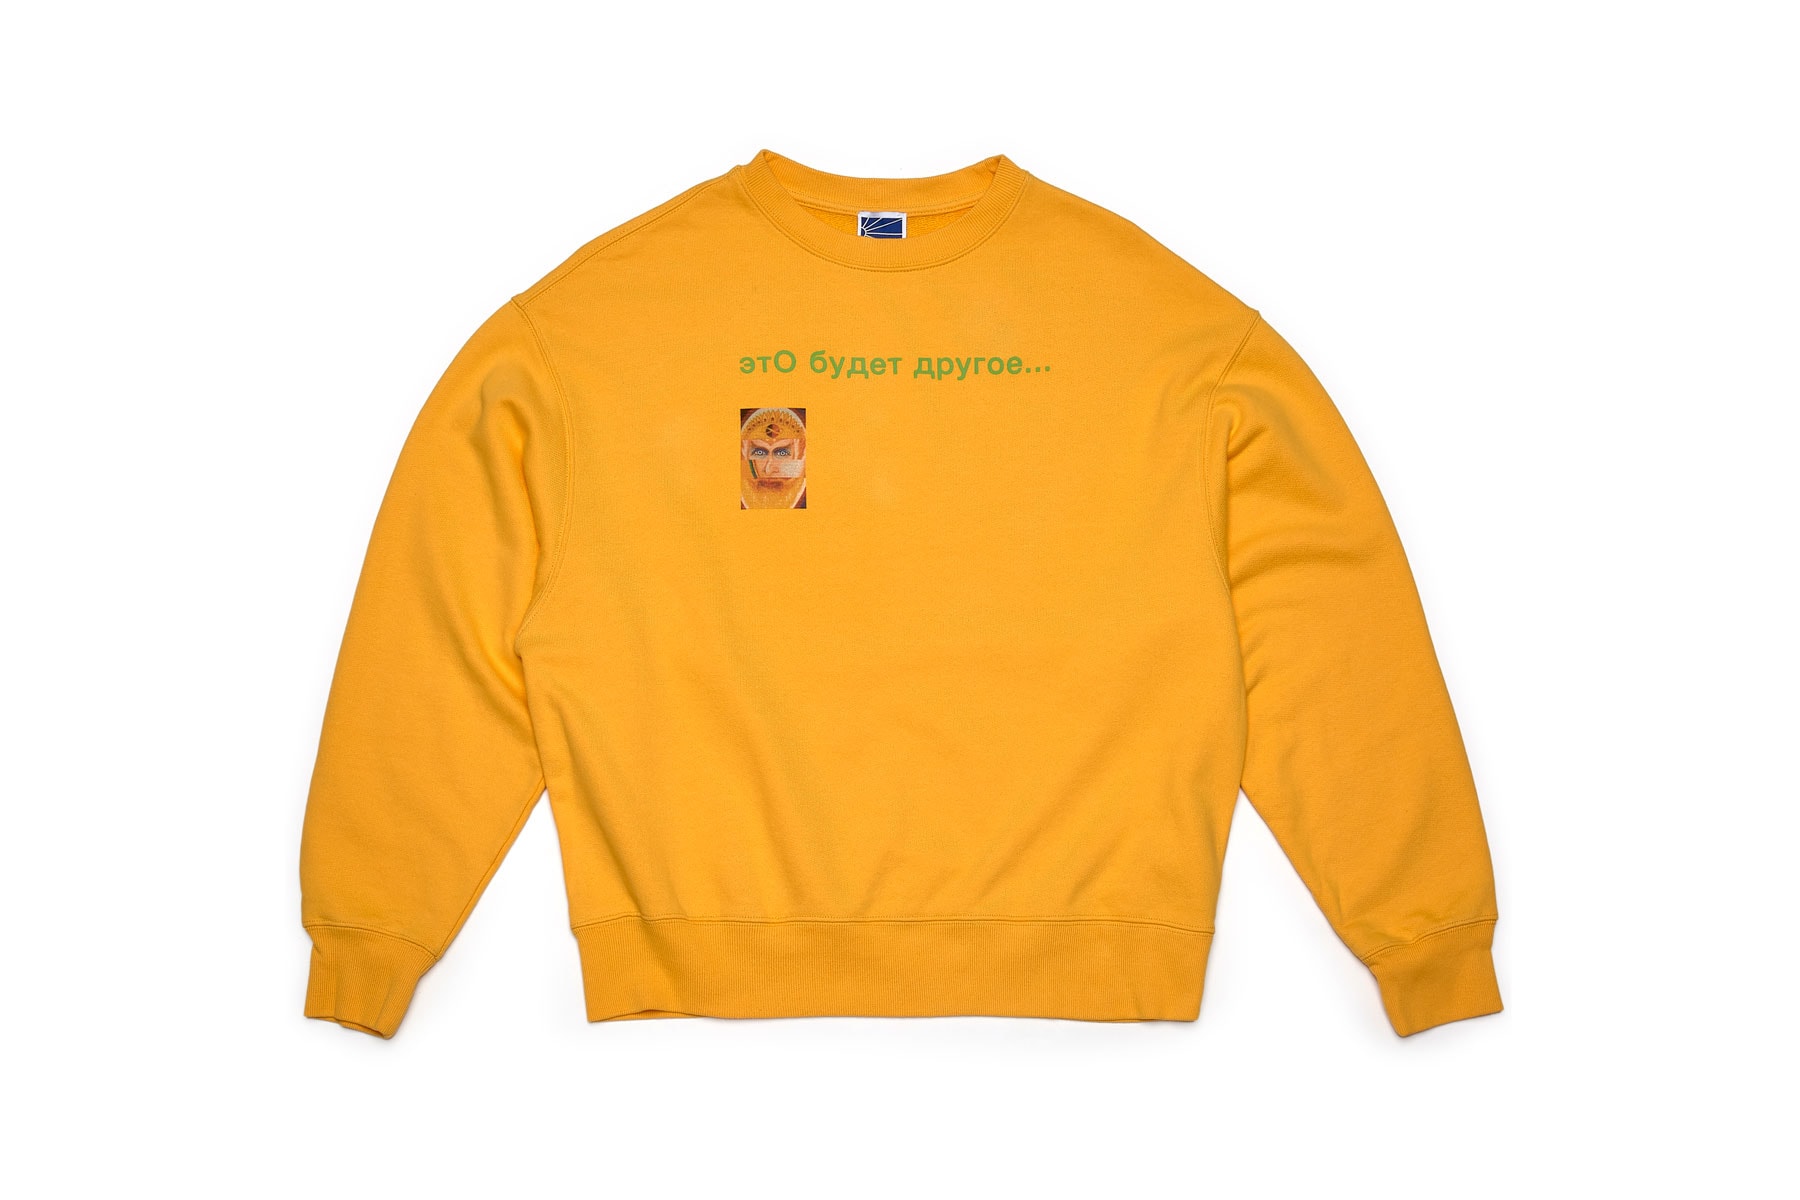 gosha rubchinskiy paccbet rassvet fall winter 2018 july 28 drop yellow sweater graphic print shirt long sleeve